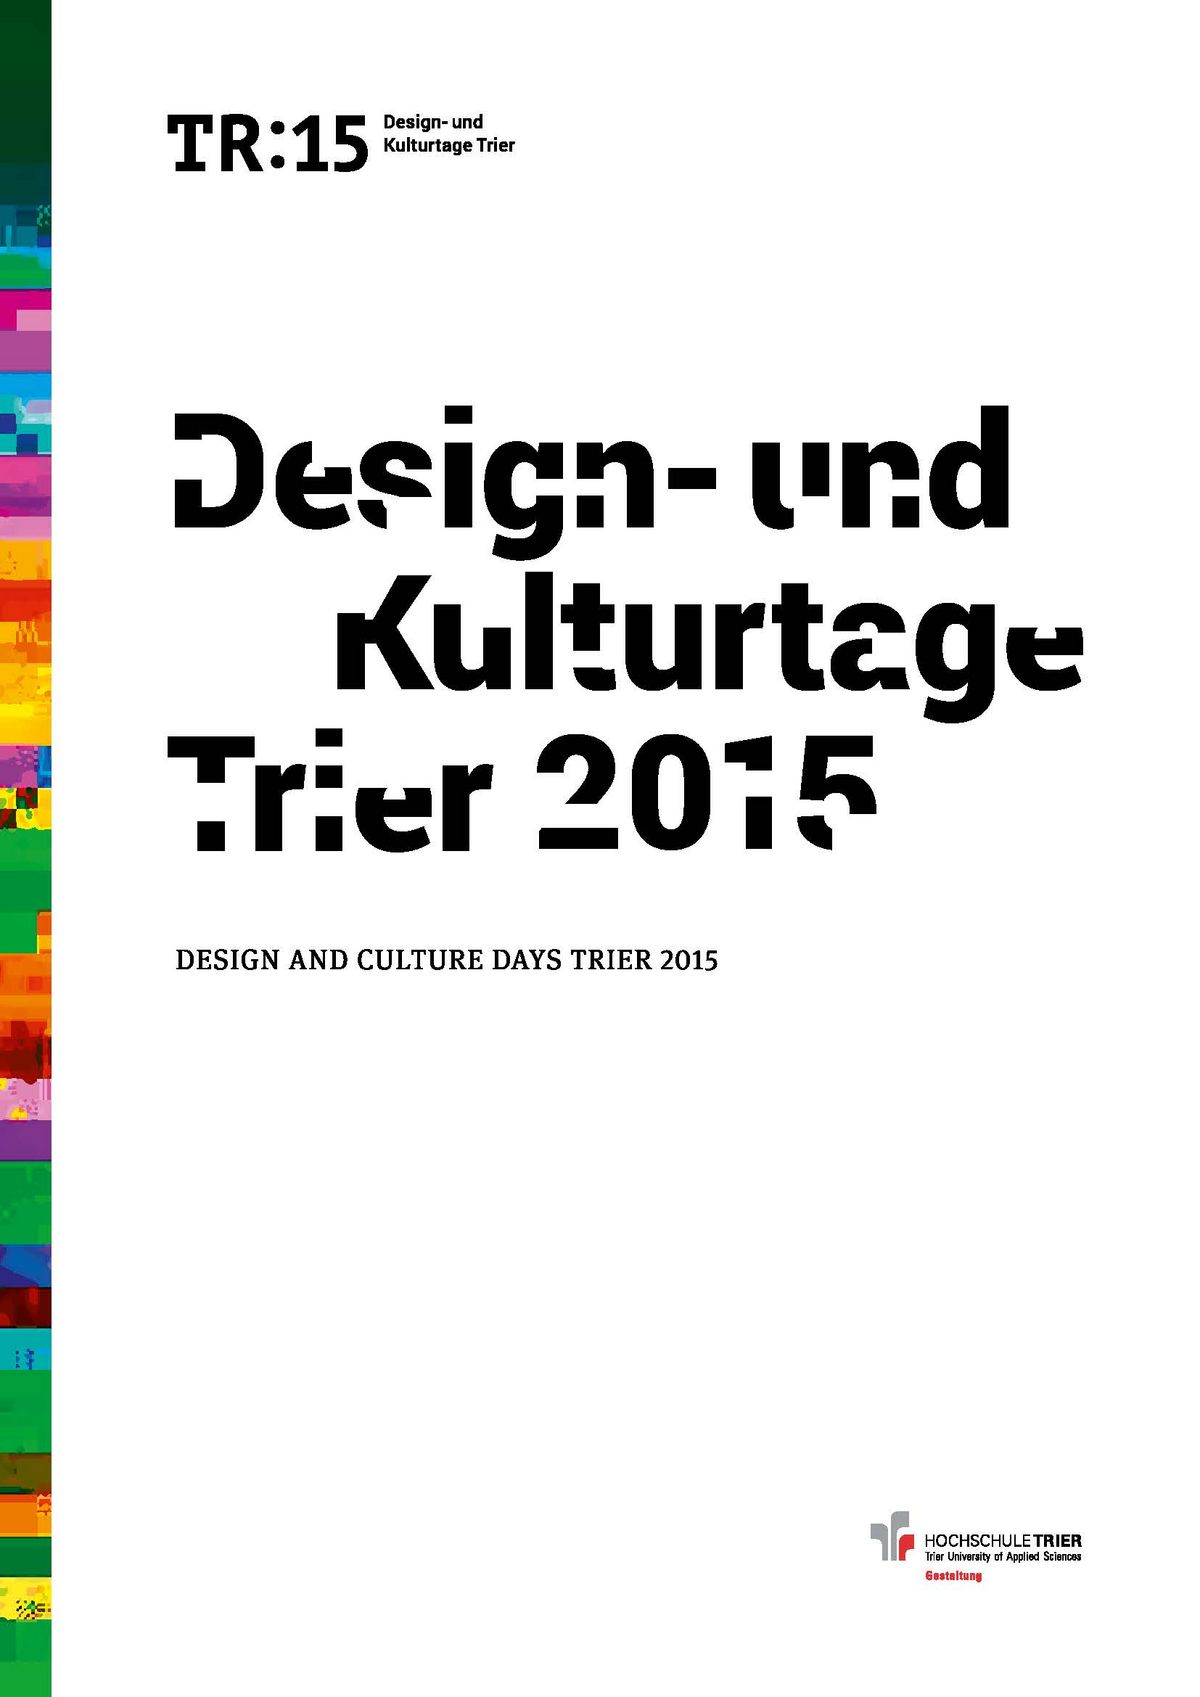 Design- und Kulturtage Publikation 2015 [Design and Culture Days Publication 2015]